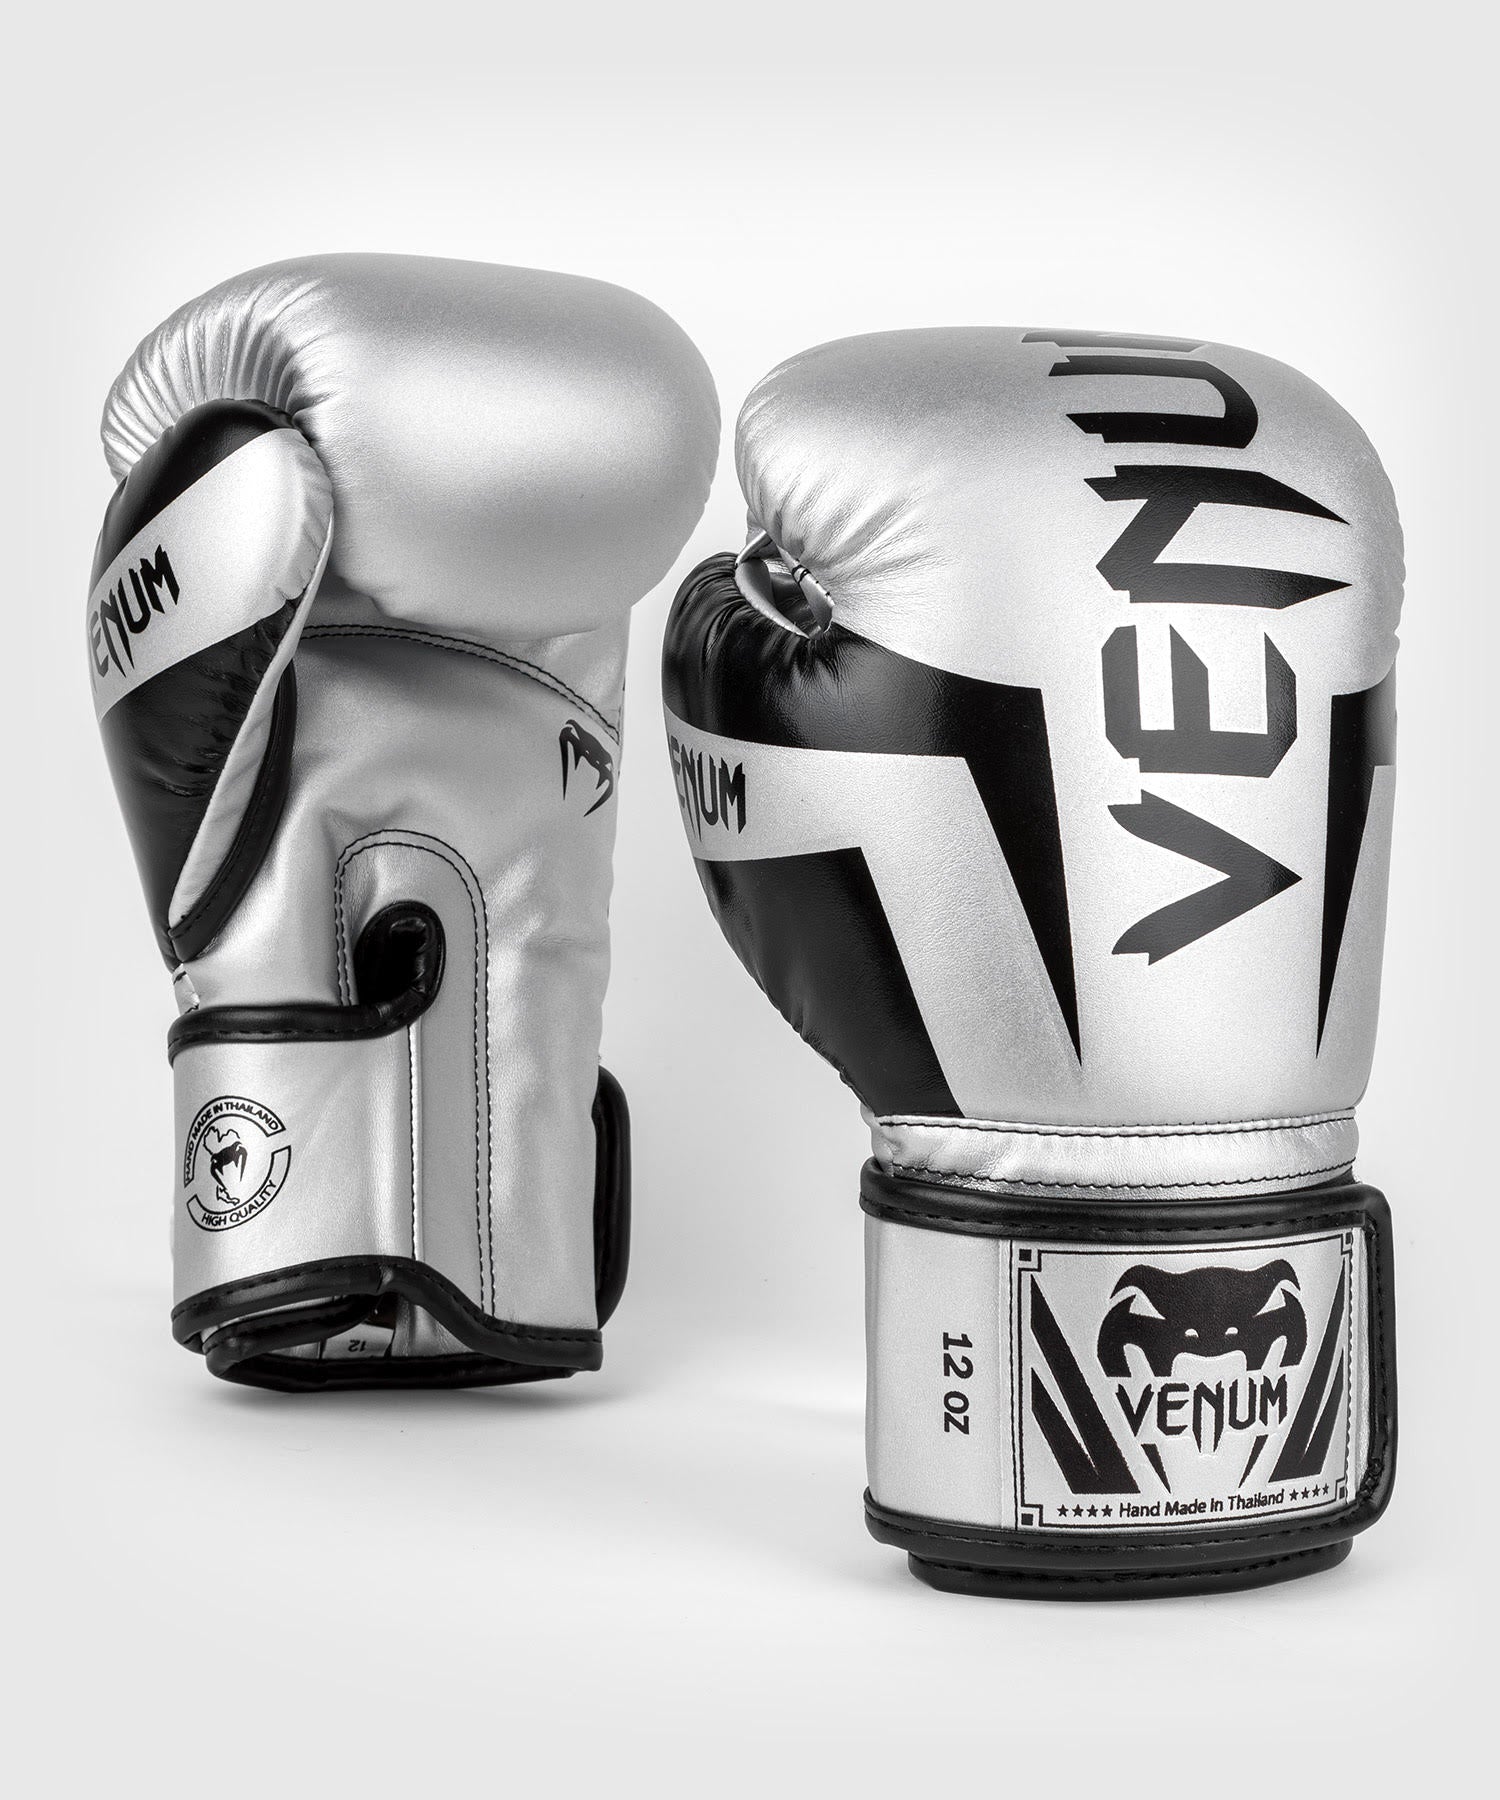  Venum Elite Boxing Shorts - Black/White - M : Clothing, Shoes  & Jewelry